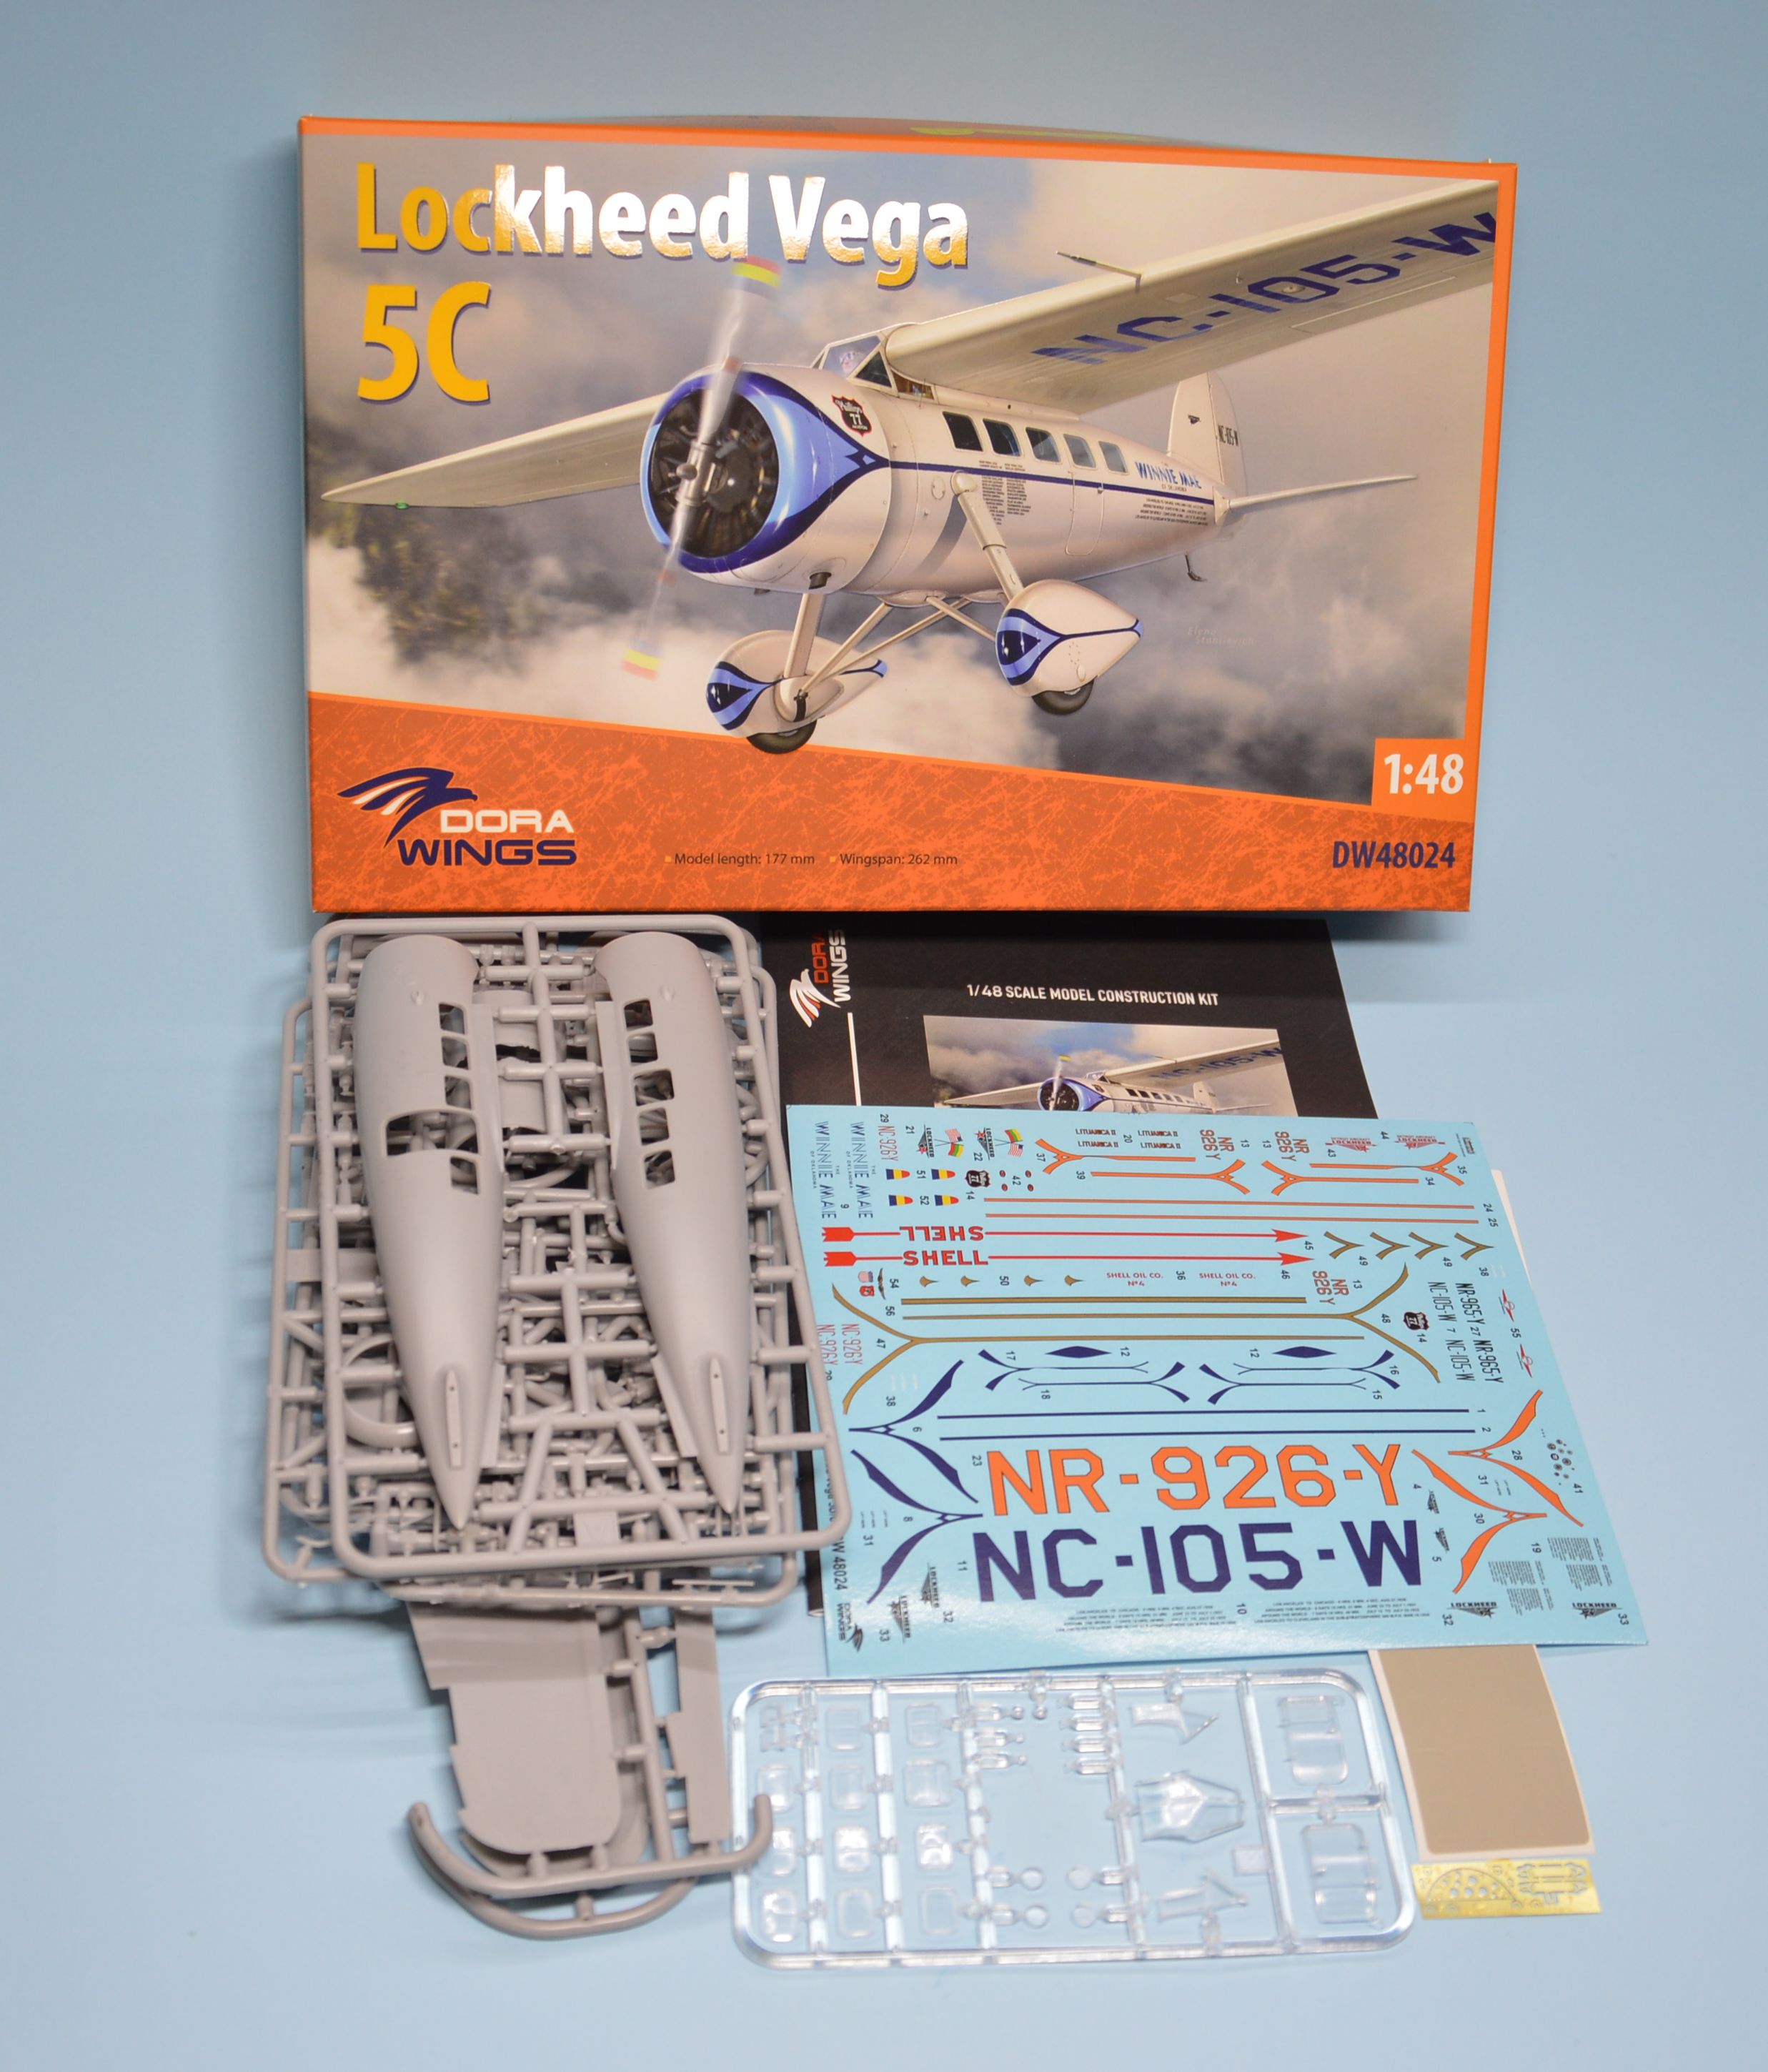 Lockheed Vega 5C (DW48024) In stock.